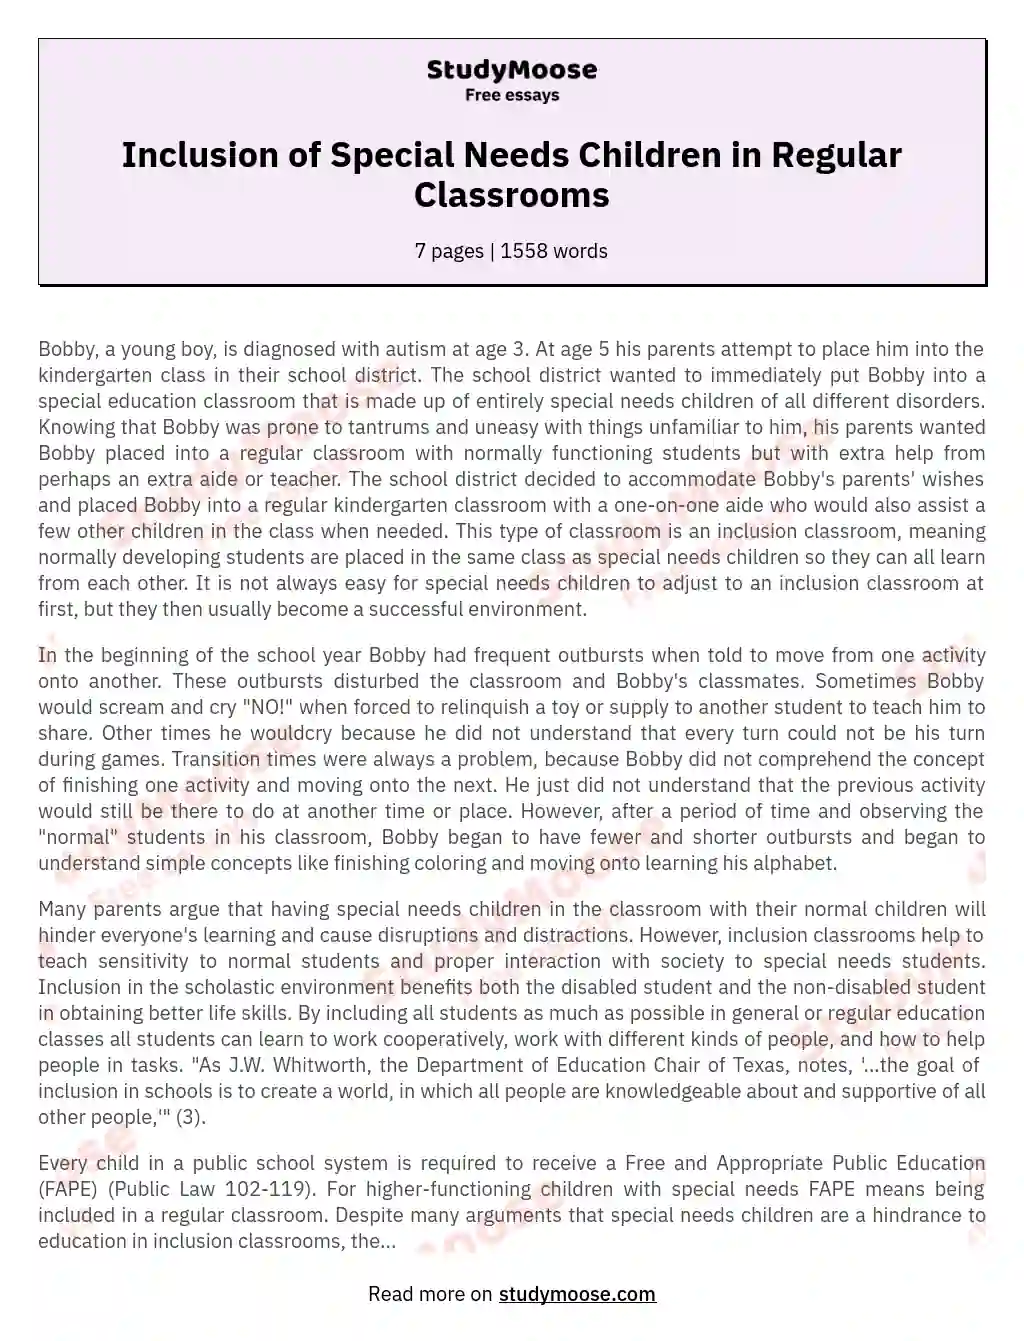 Inclusion of Special Needs Children in Regular Classrooms essay